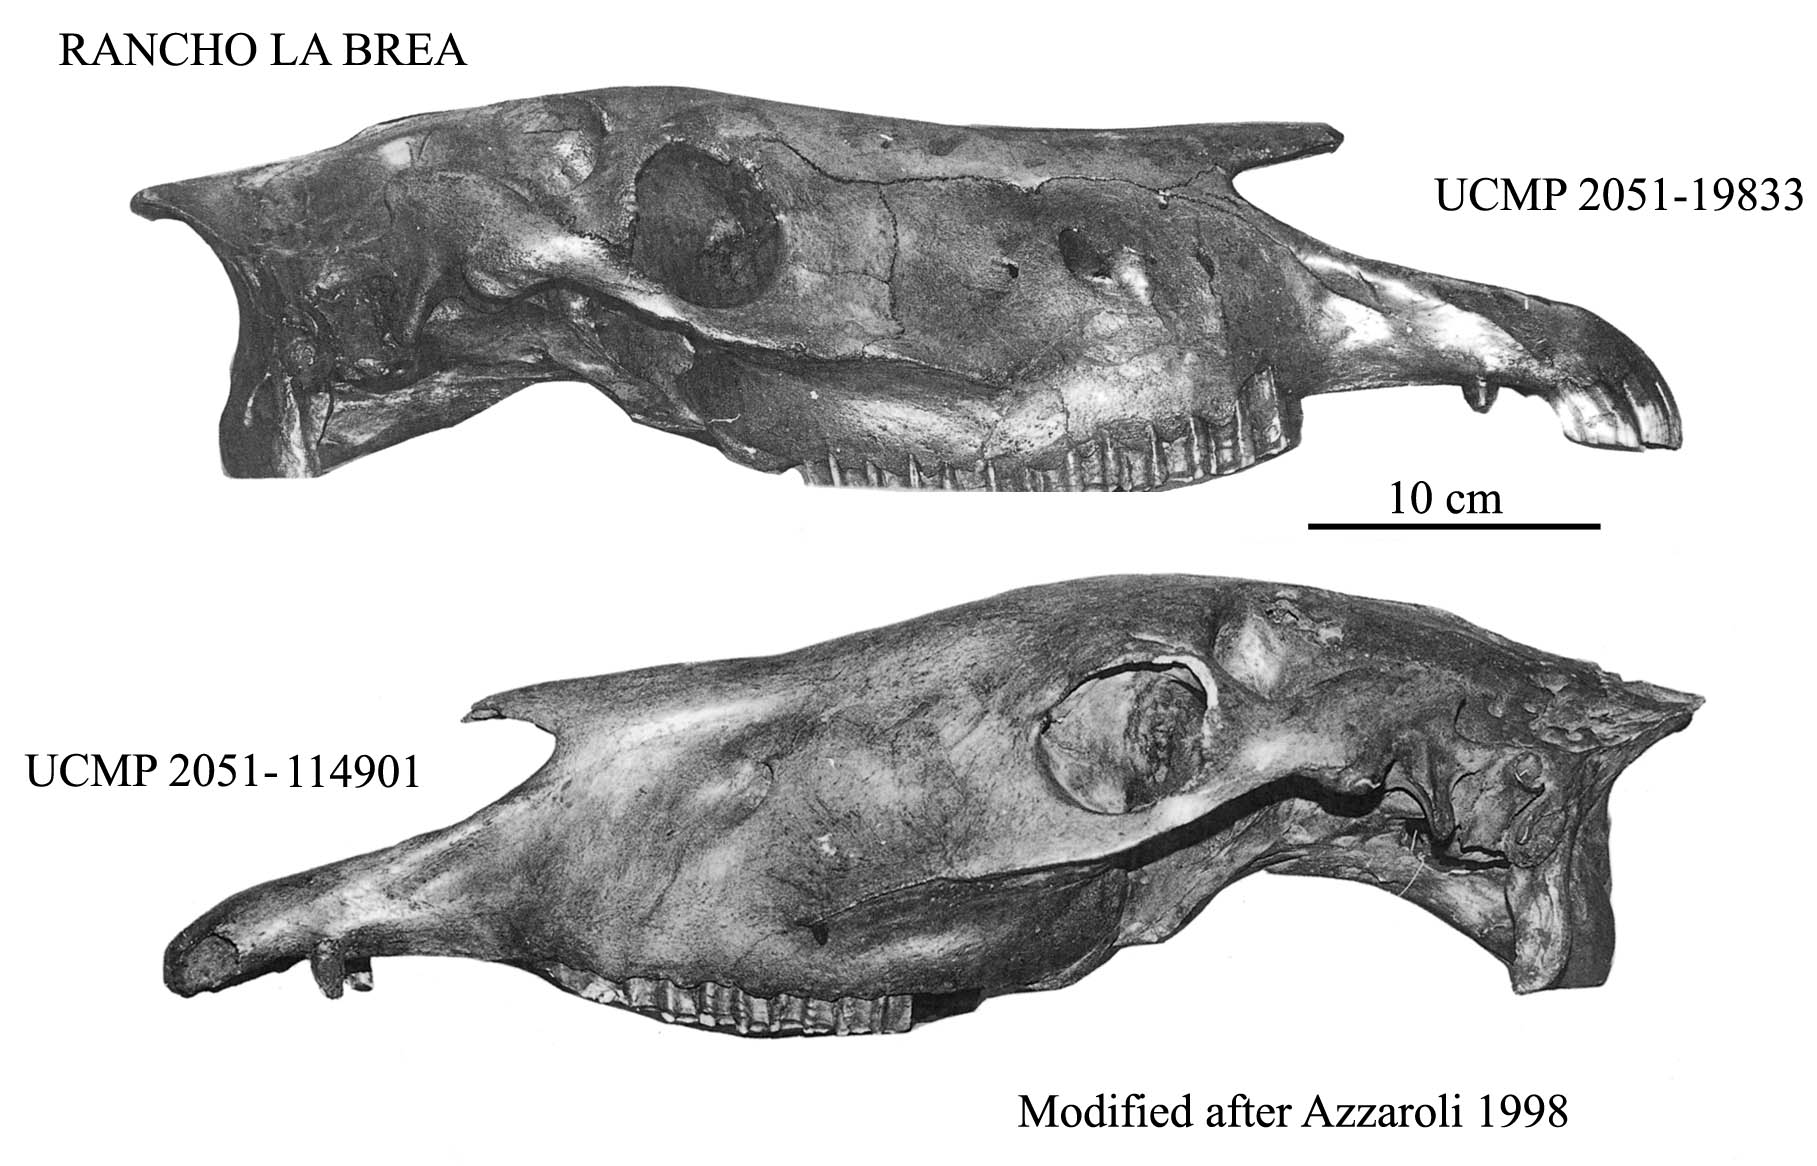 UCMP 2051-114901 and 19833 Crania Profiles